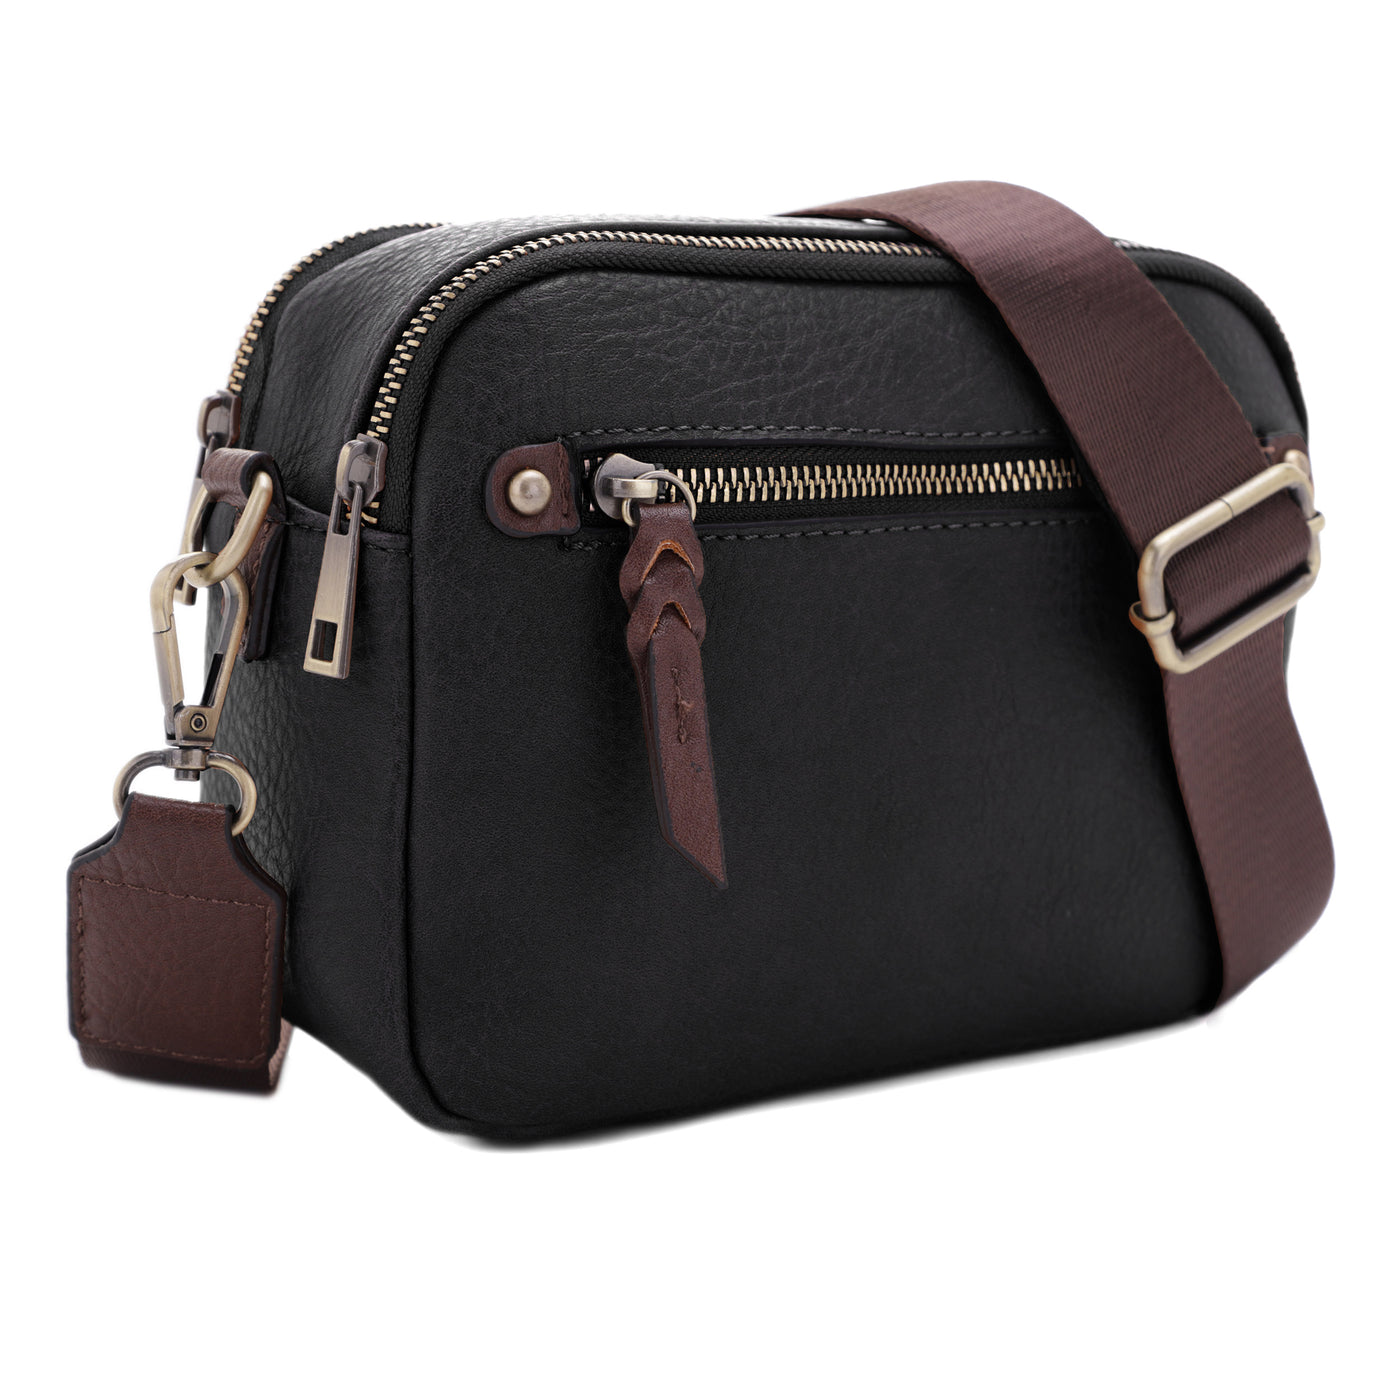 Iris - Concealed Carry Purse - Gun Handbags